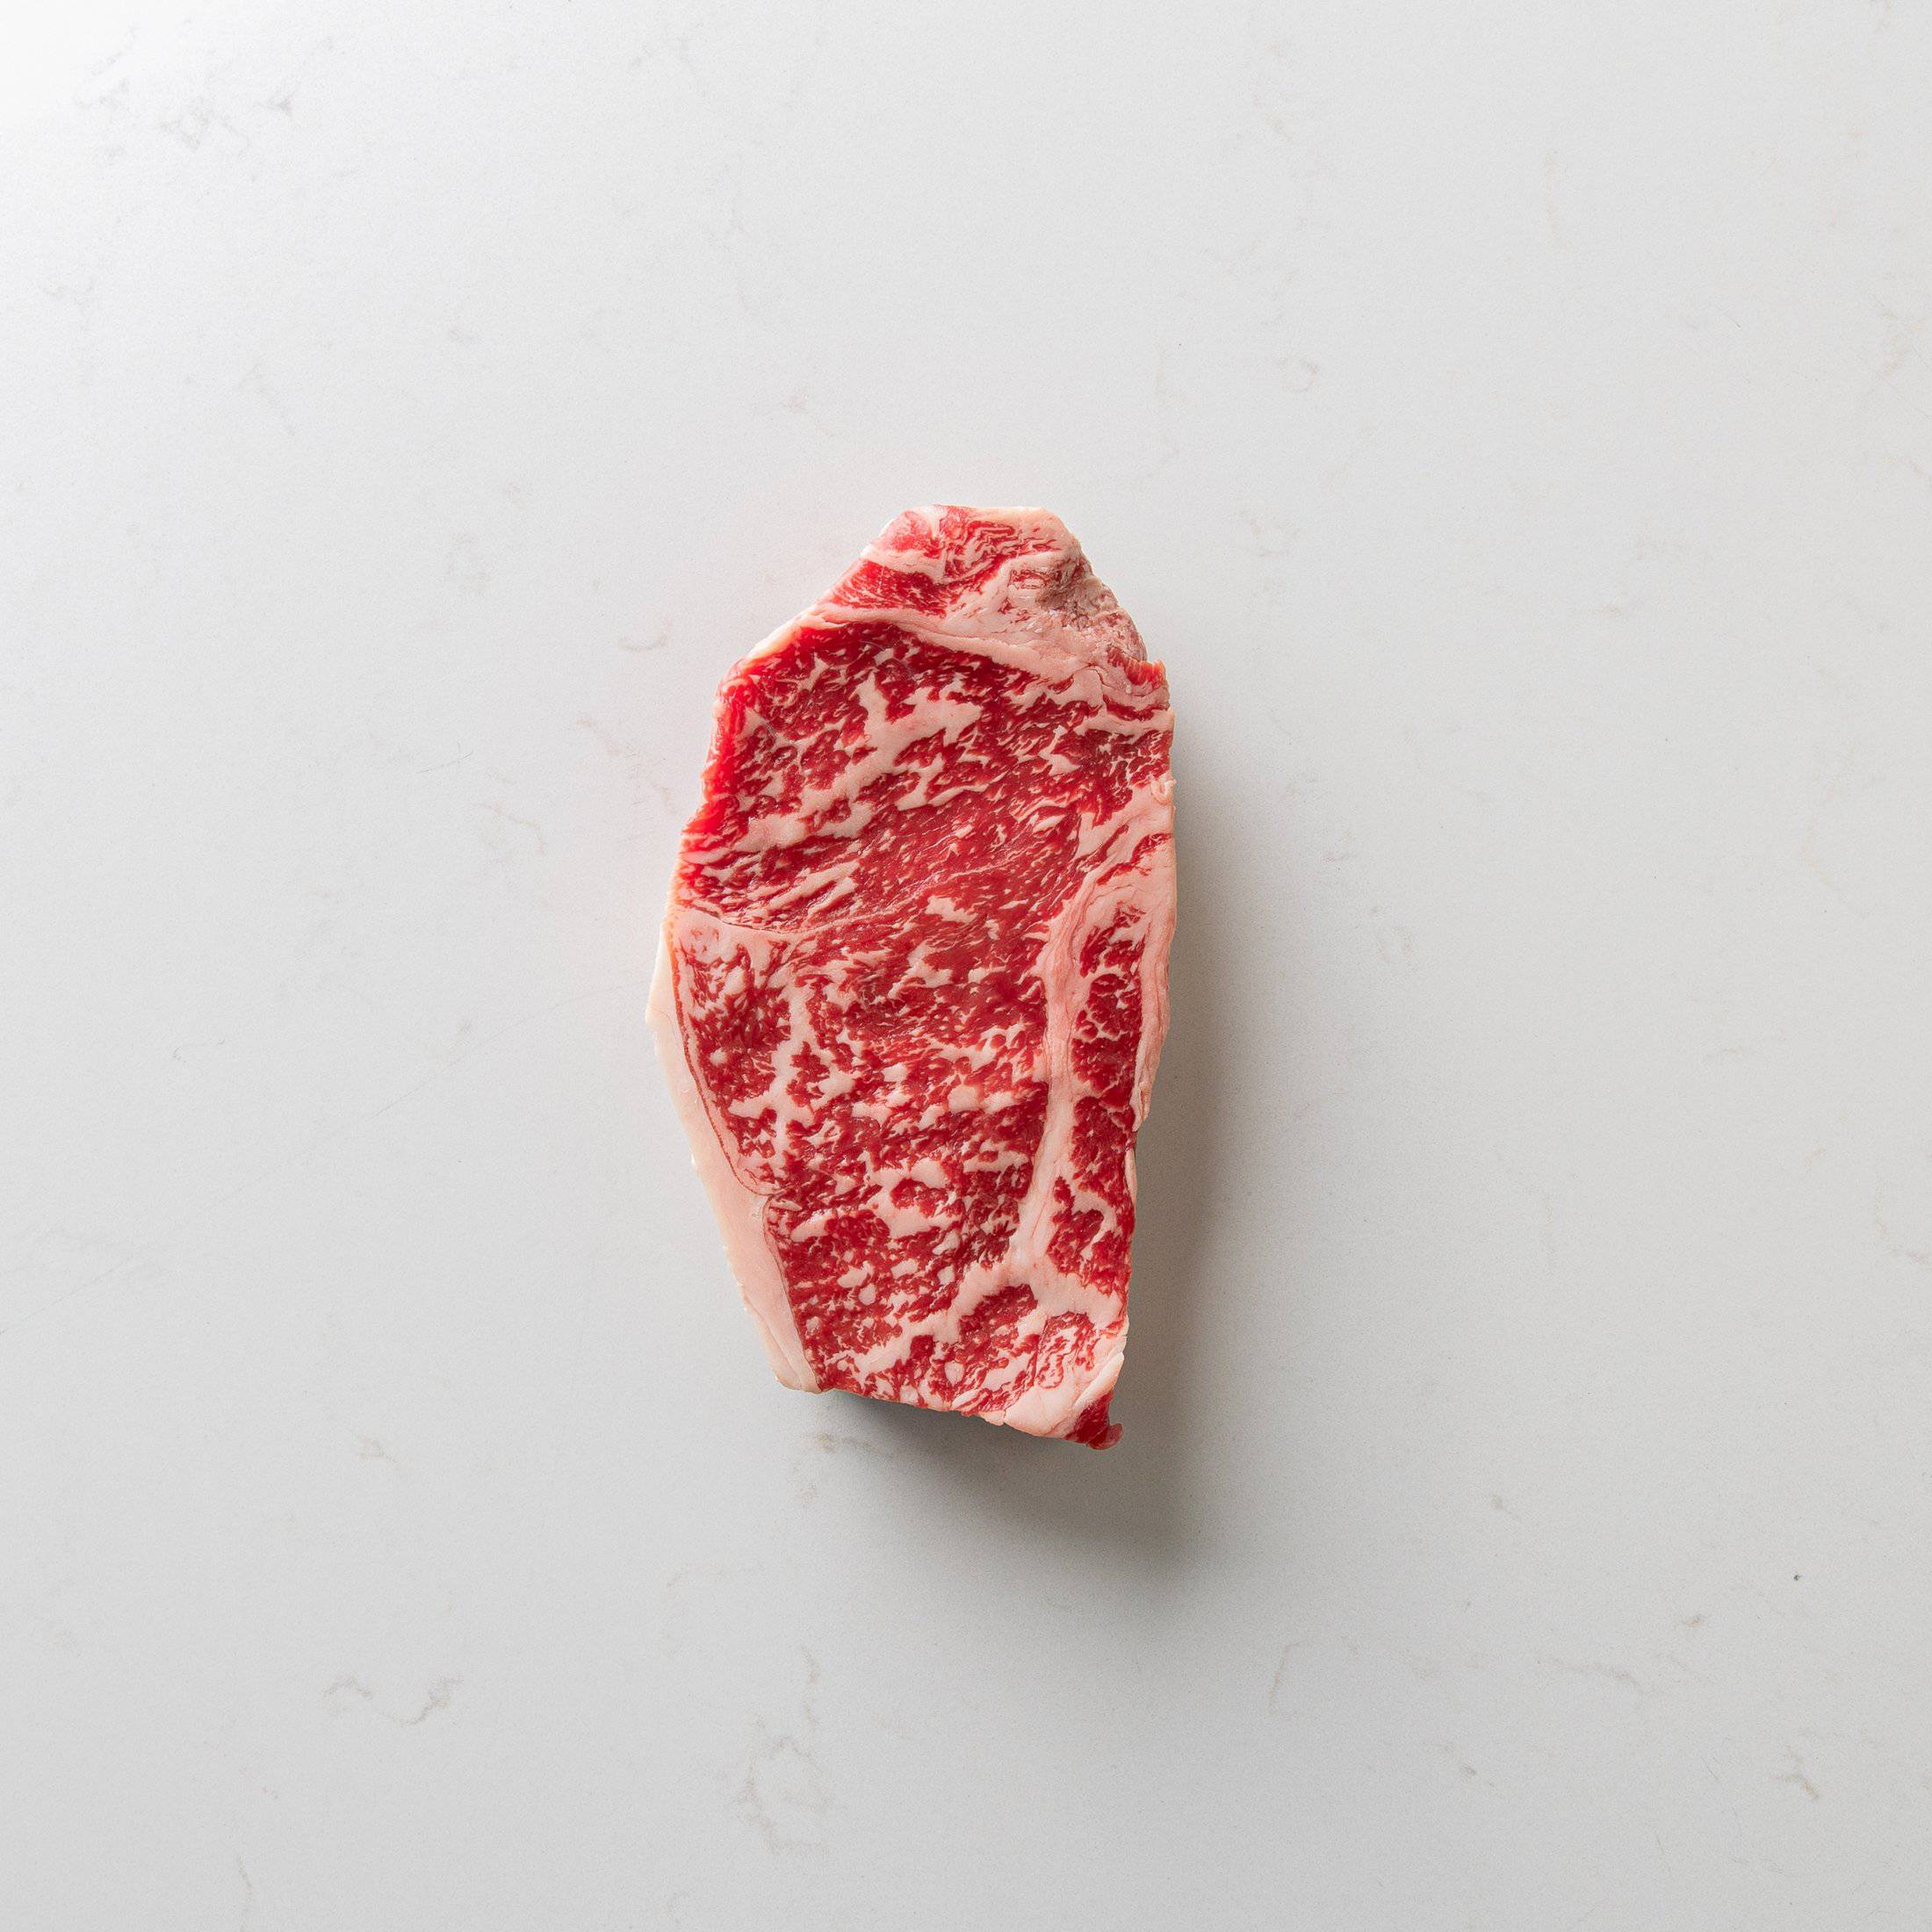 Australian Wagyu Beef Striploin Steak